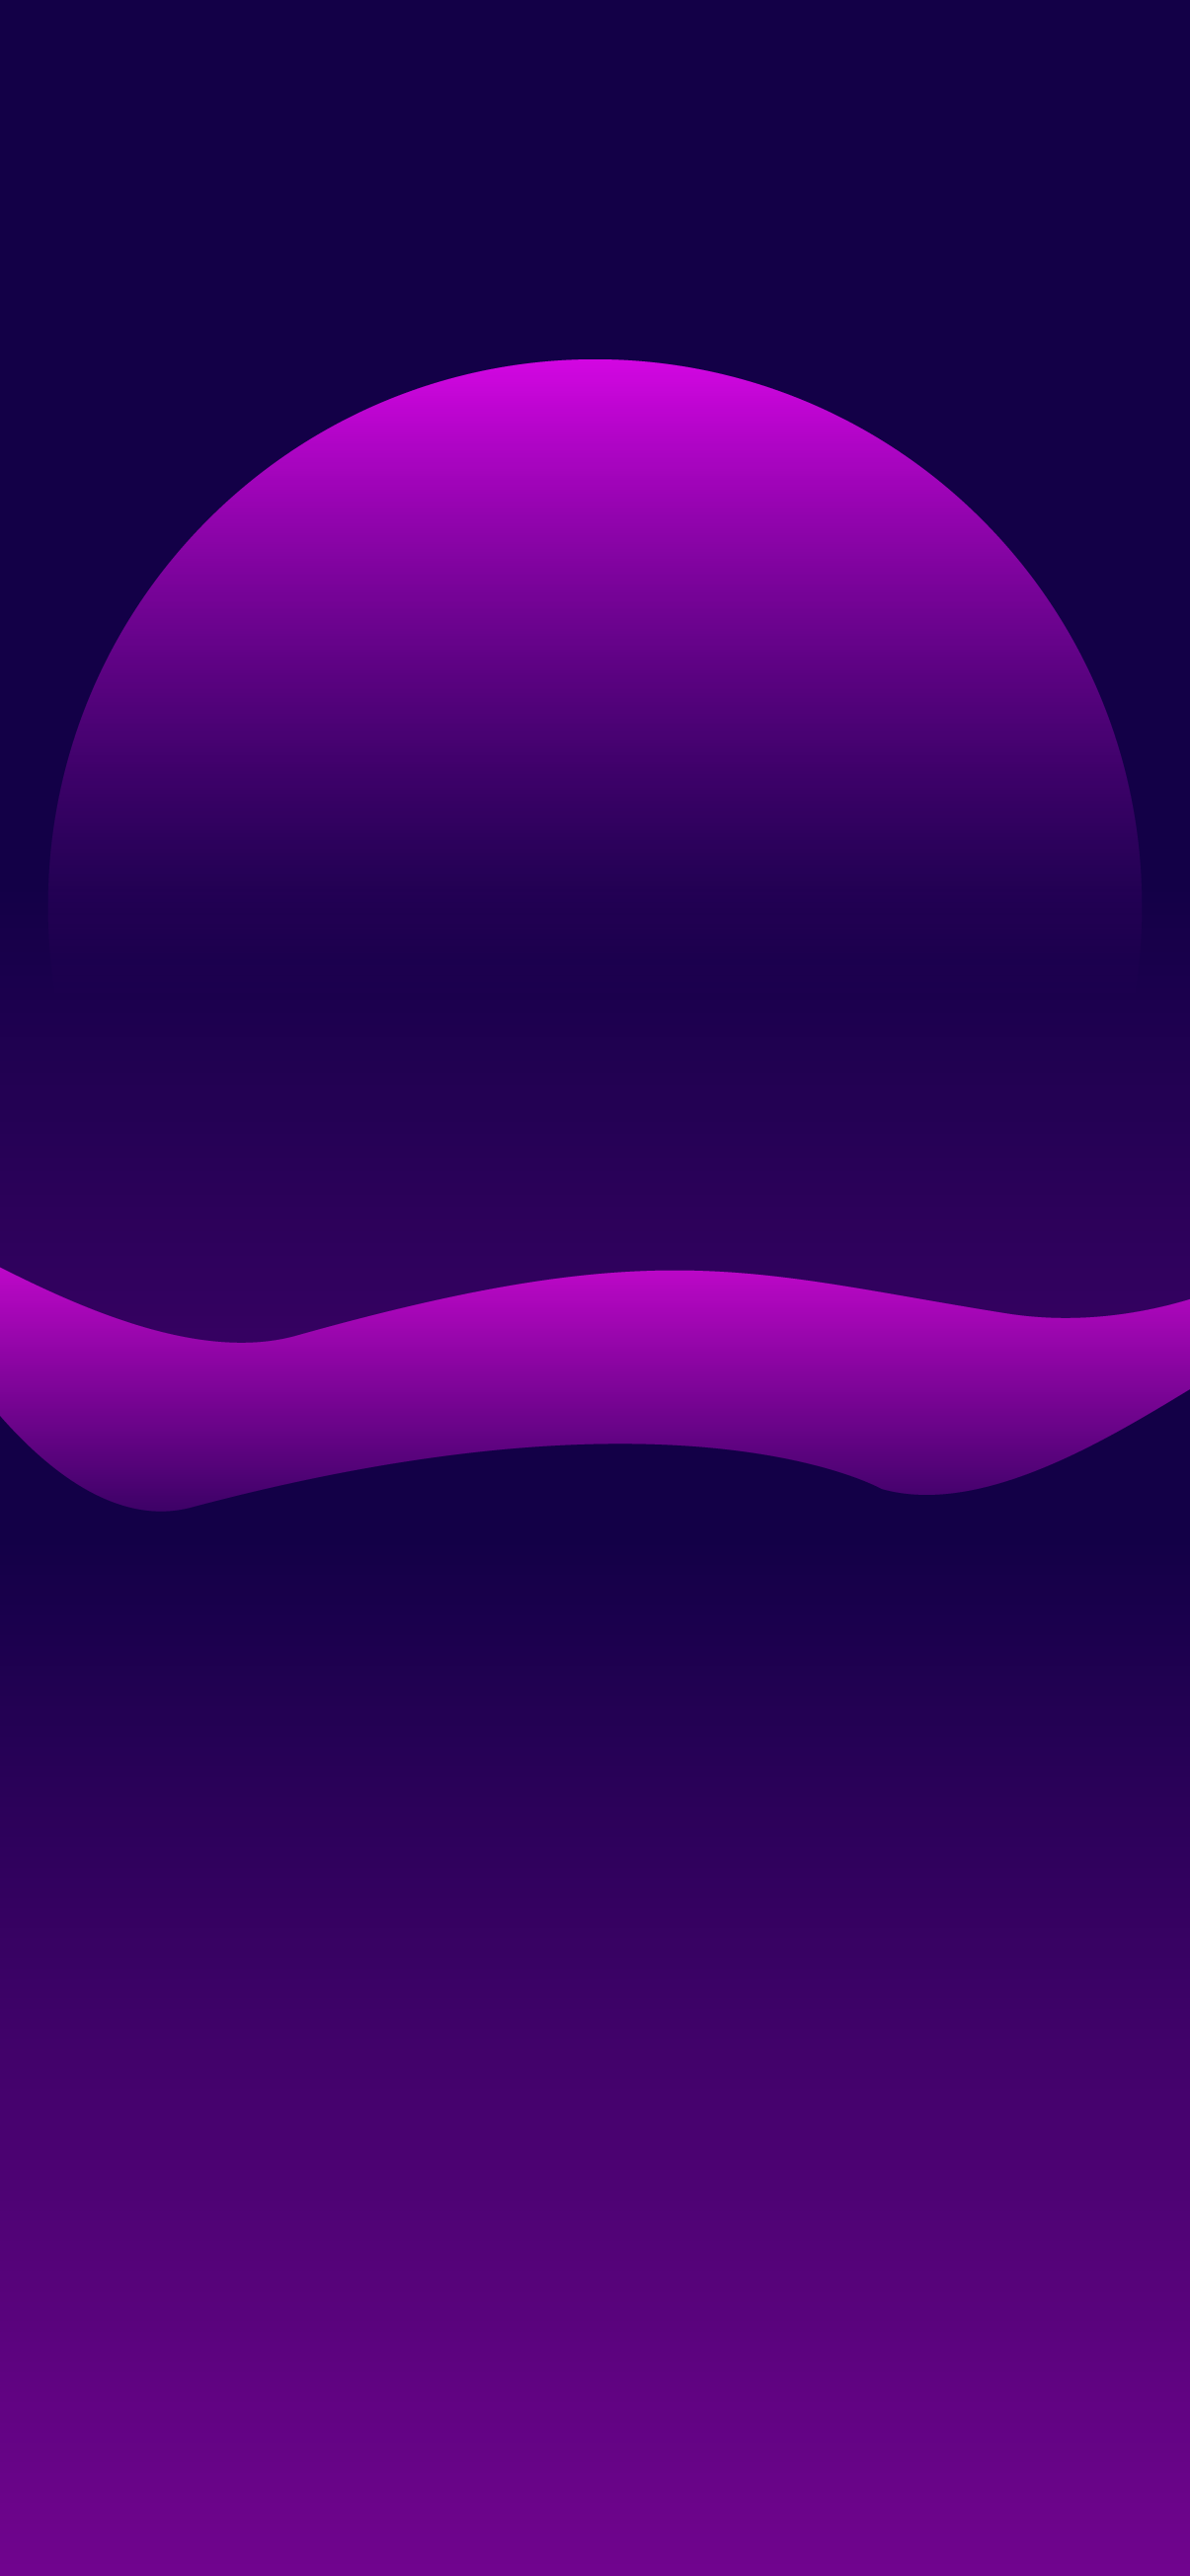 iPhone purple background wallpaper